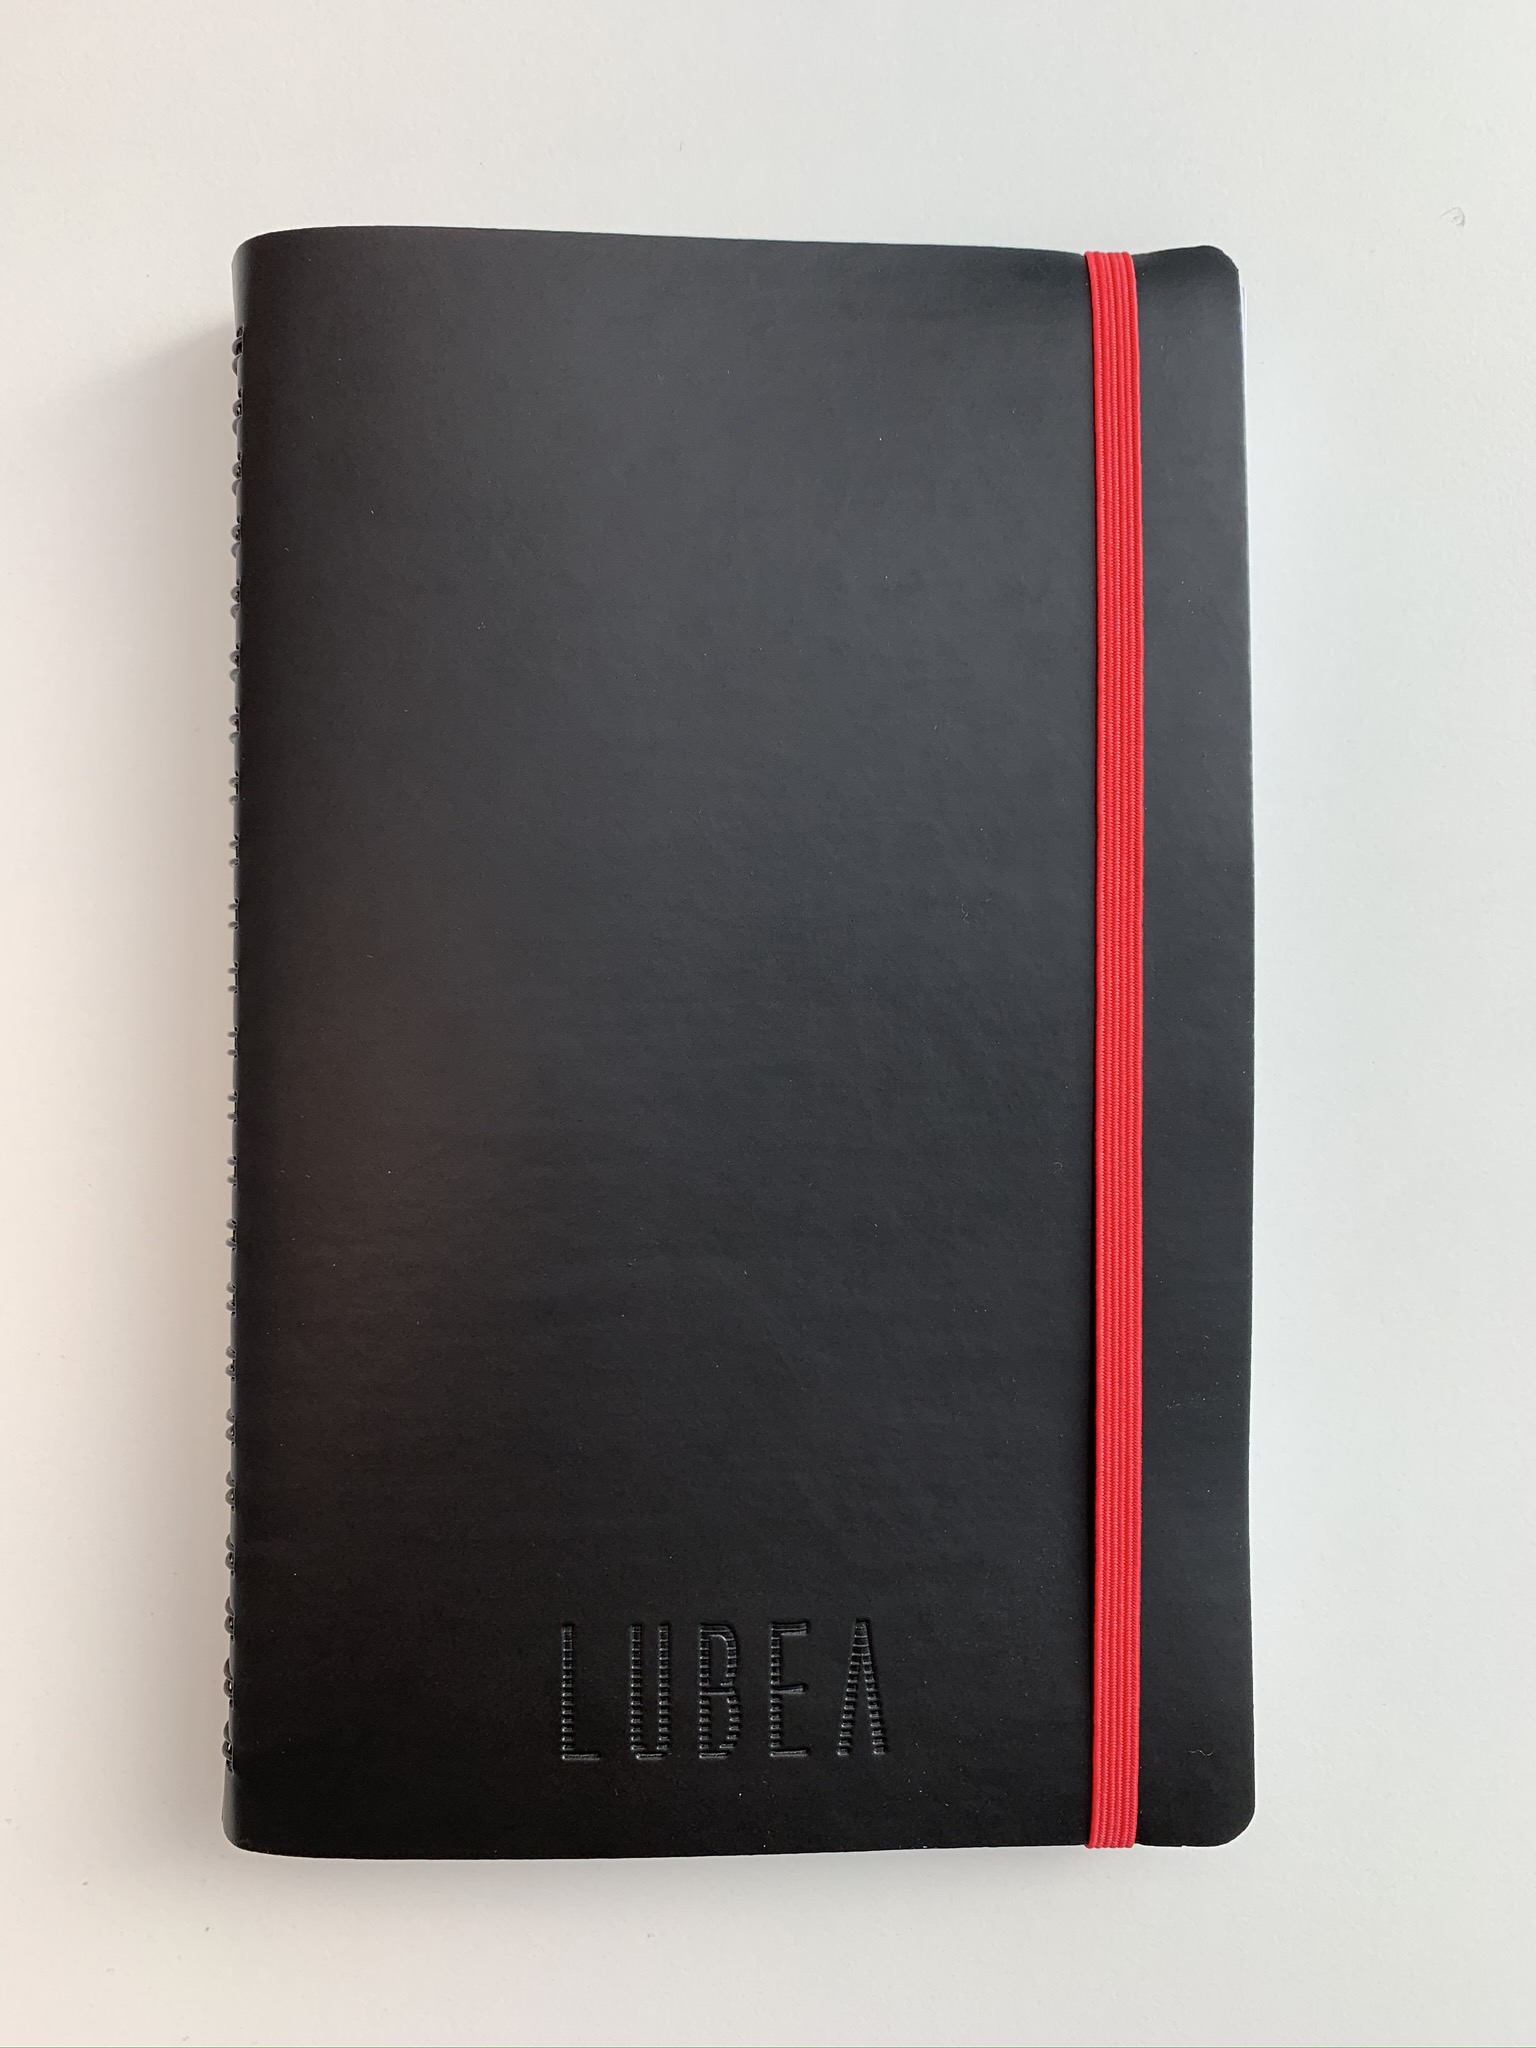 LUBEA – Notebook